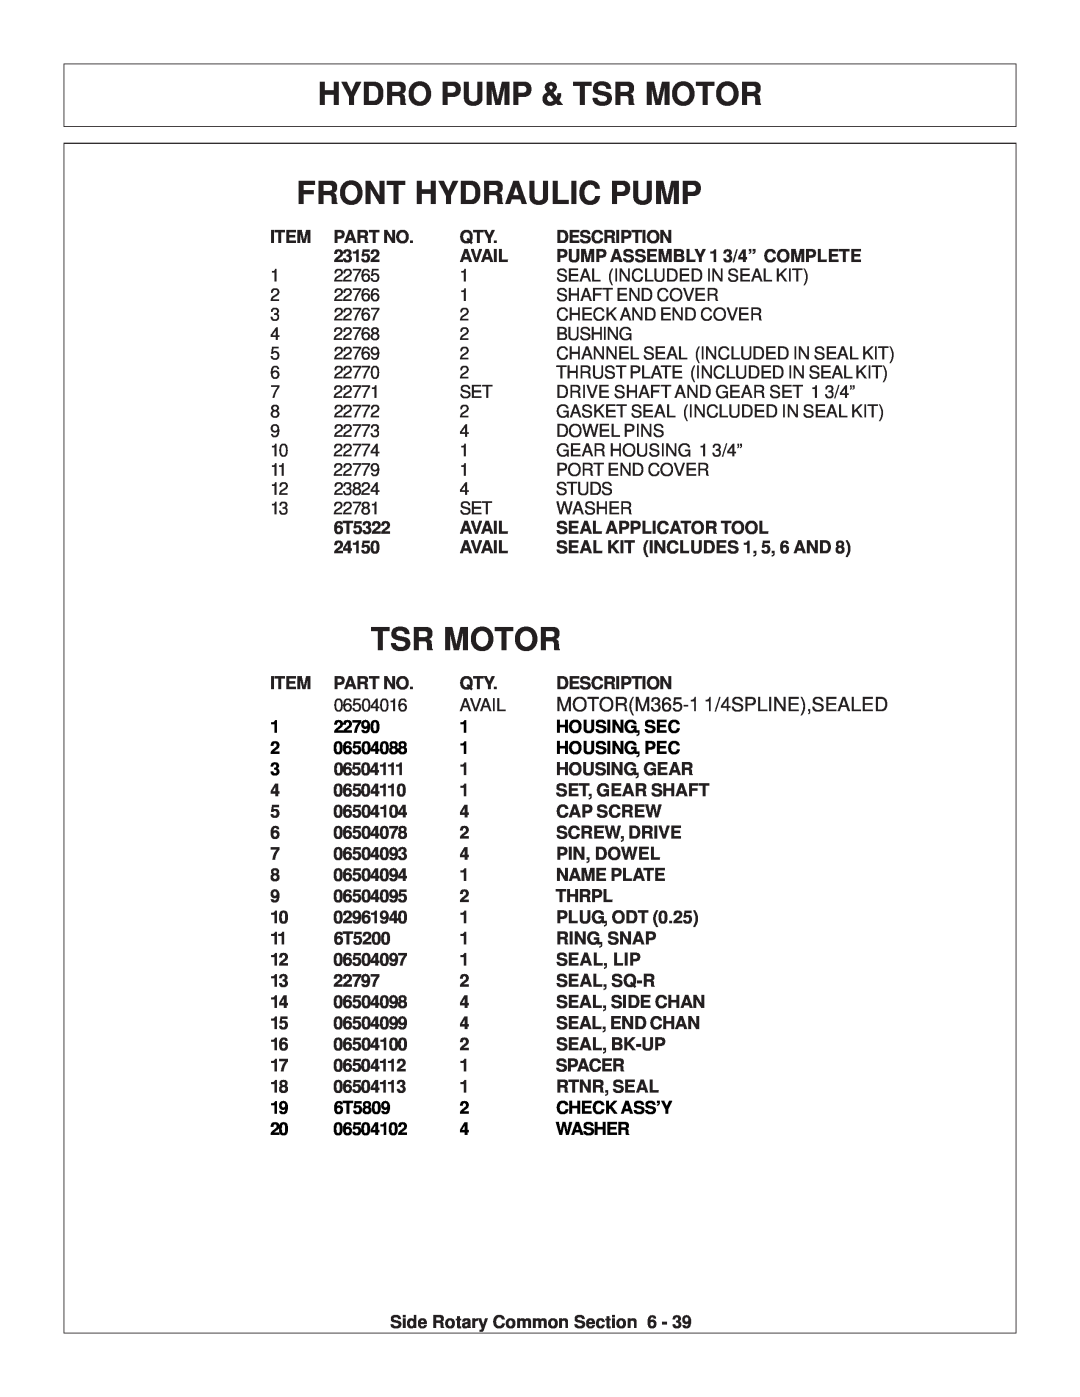 Tiger Products Co., Ltd TS 100A manual Hydro Pump & Tsr Motor, Front Hydraulic Pump, MOTORM365-1 1/4SPLINE,SEALED 